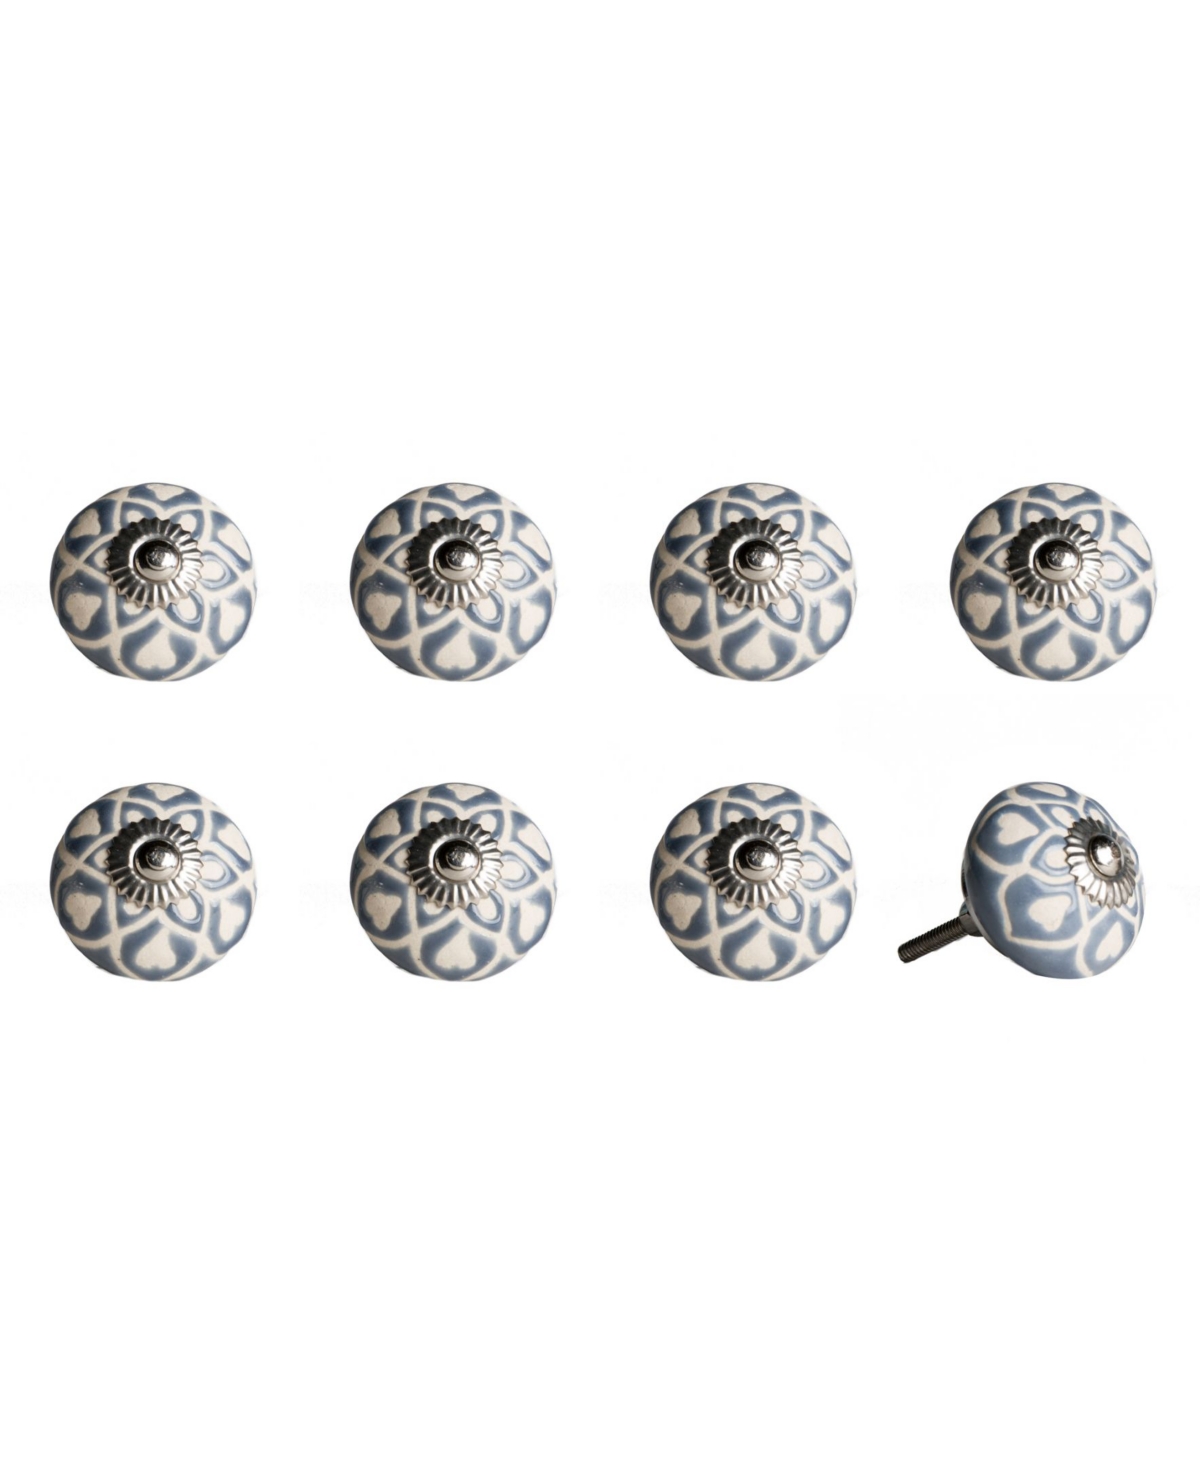 Knob-It Handpainted Ceramic Knob Set of 8